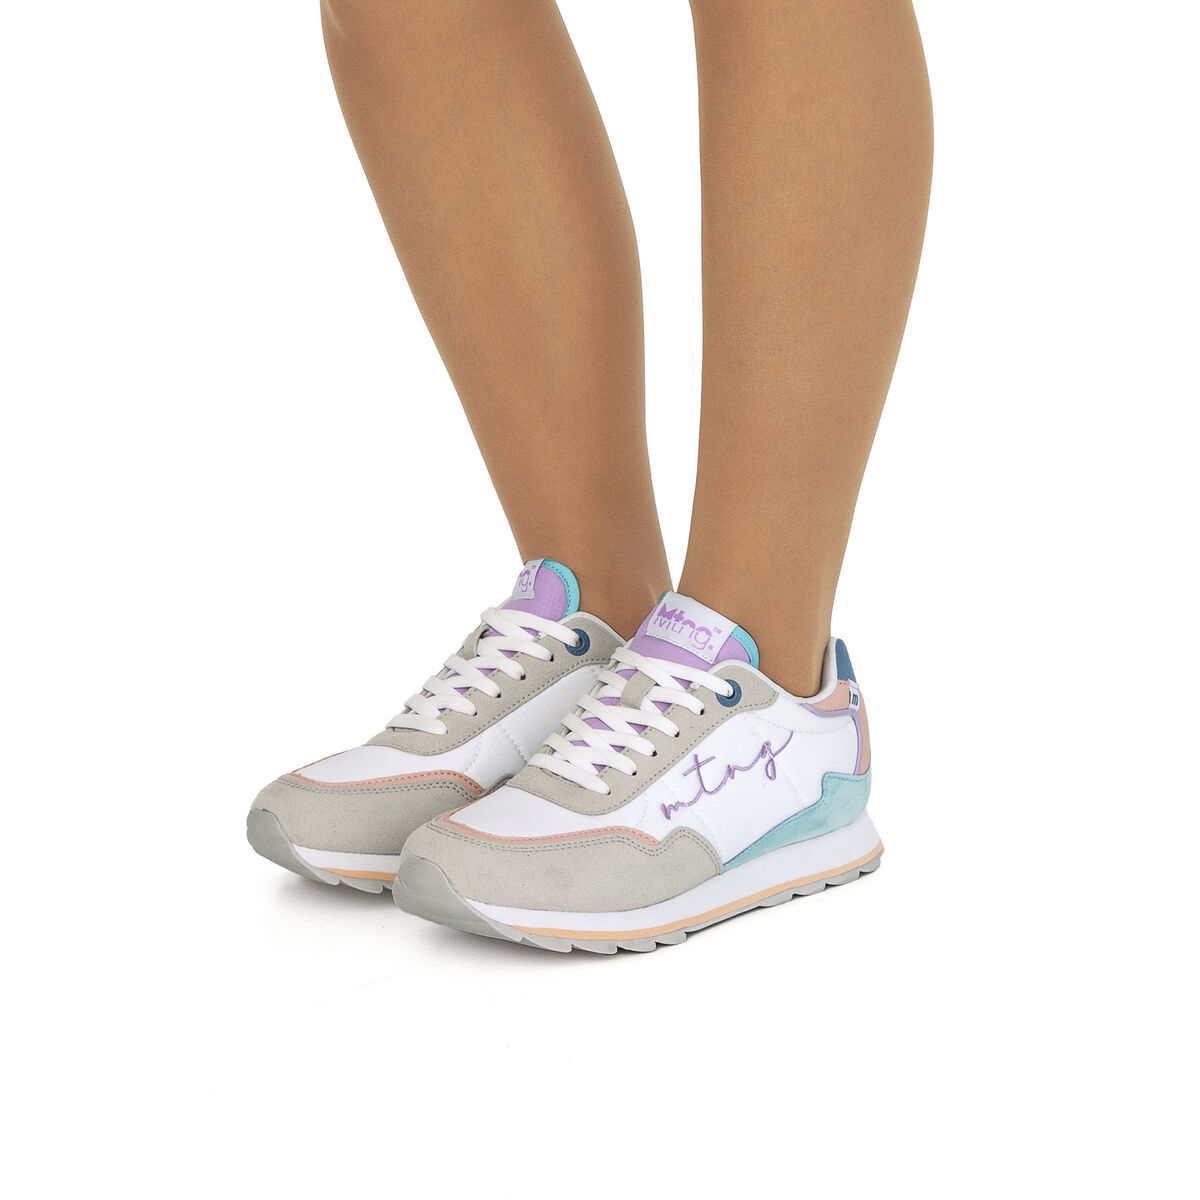 Sneakers de Mulher modelo JOGGO SAI de MTNG image number 1